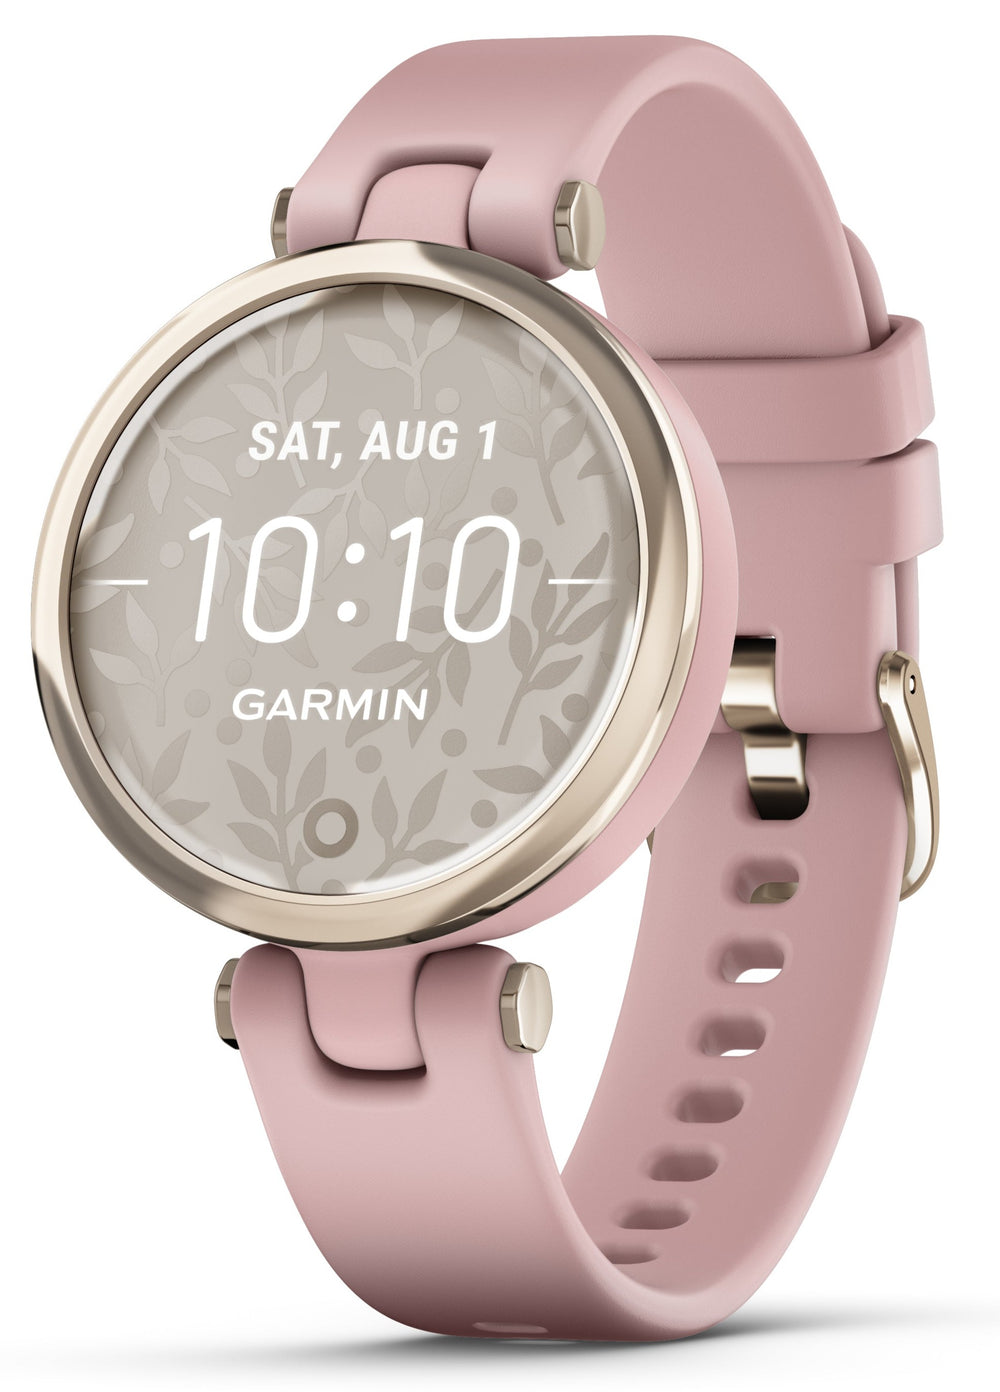 Garmin Venu 2 review: A fantastic smartwatch priced out of its league